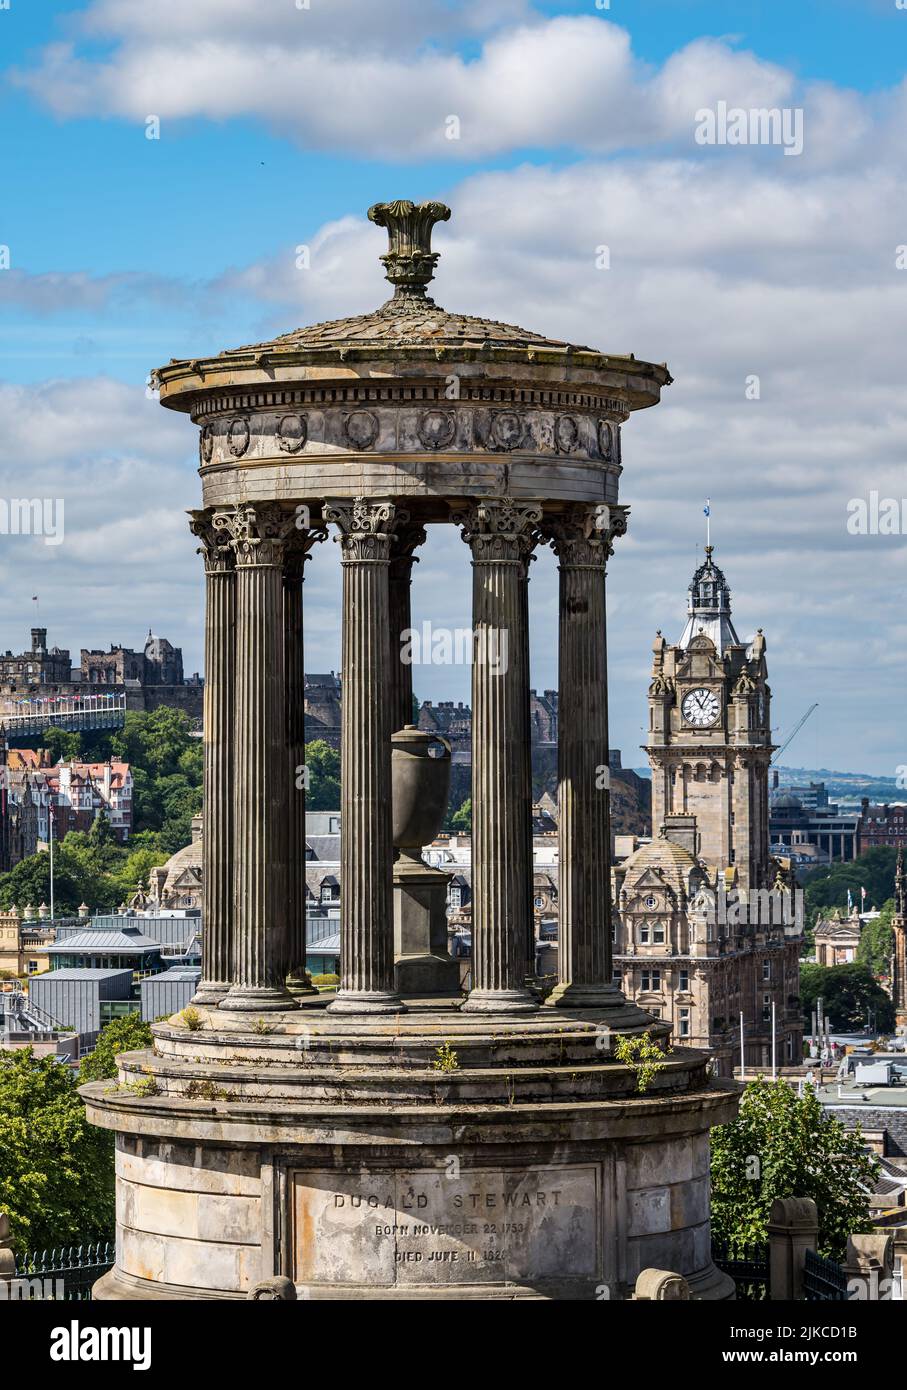 View of Dugald Stewart Monument over city skyline with Balmoral hotel clock tower, Edinburgh, Scotland, UK Stock Photo